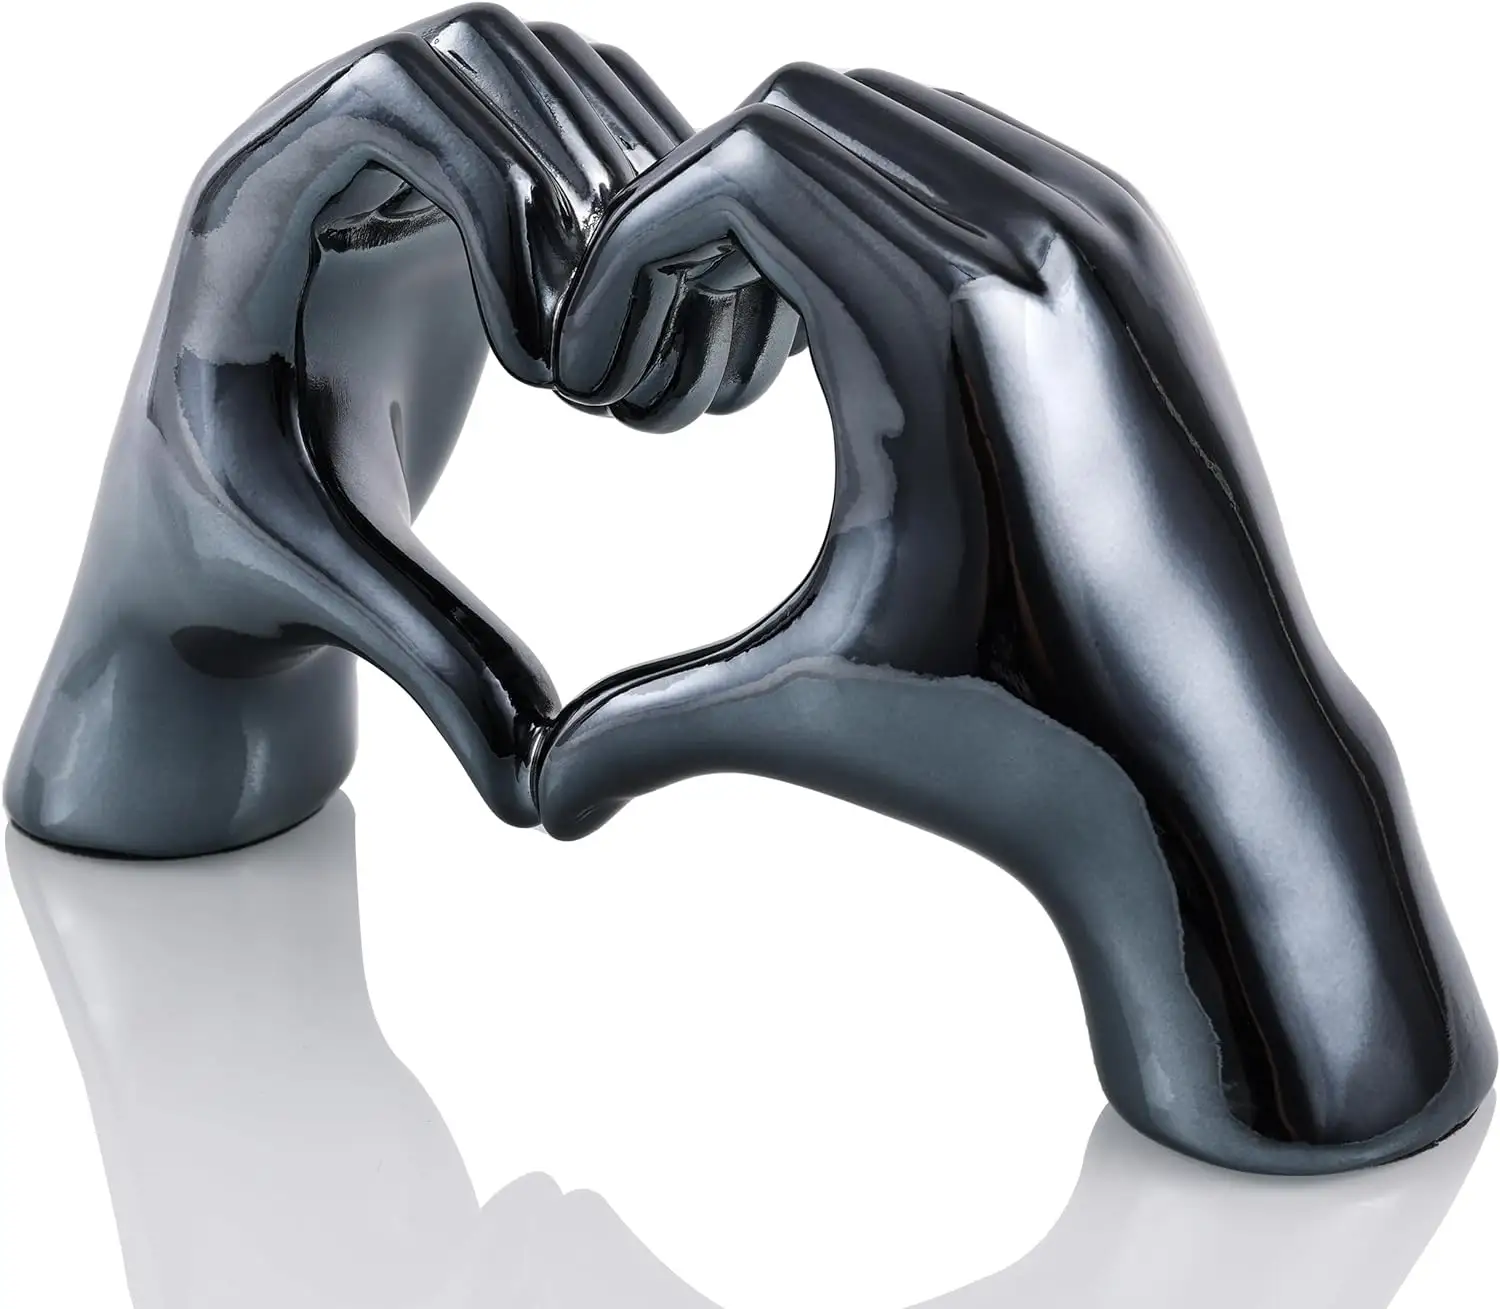 Vendita calda scultura in resina con gesto d'amore scultura da casa scultura decorativa decorazione regalo anniversario matrimonio